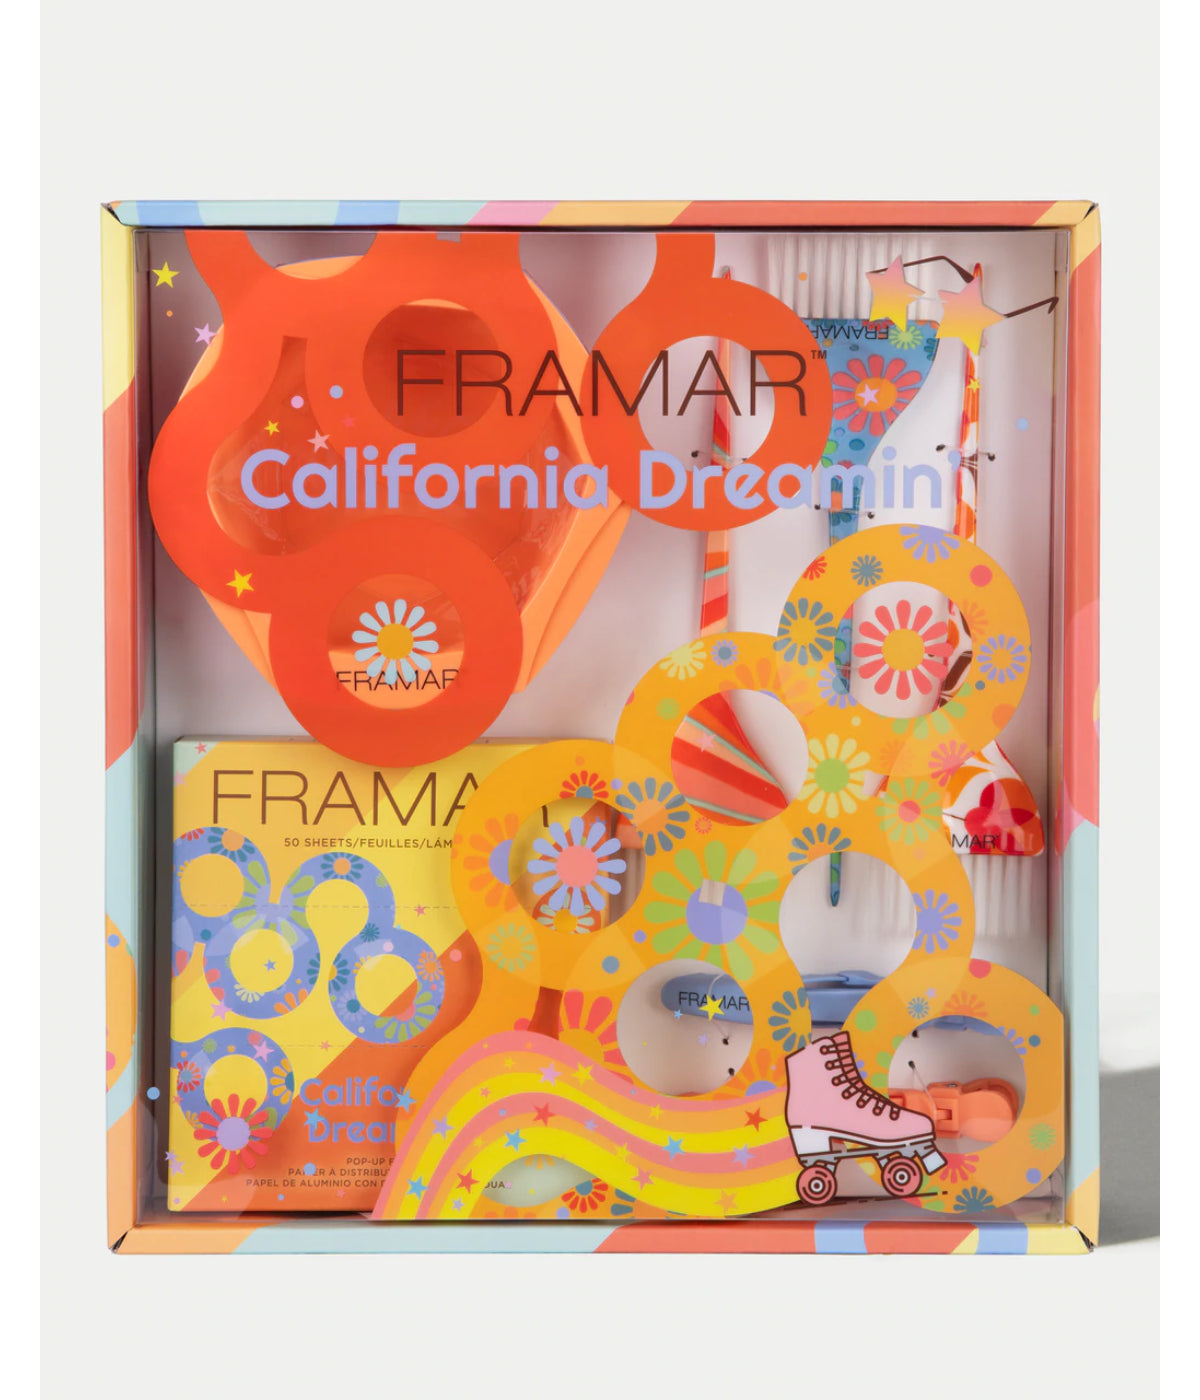 Framar California Dreamin' Colorist Kit – Pro Beauty Supplies